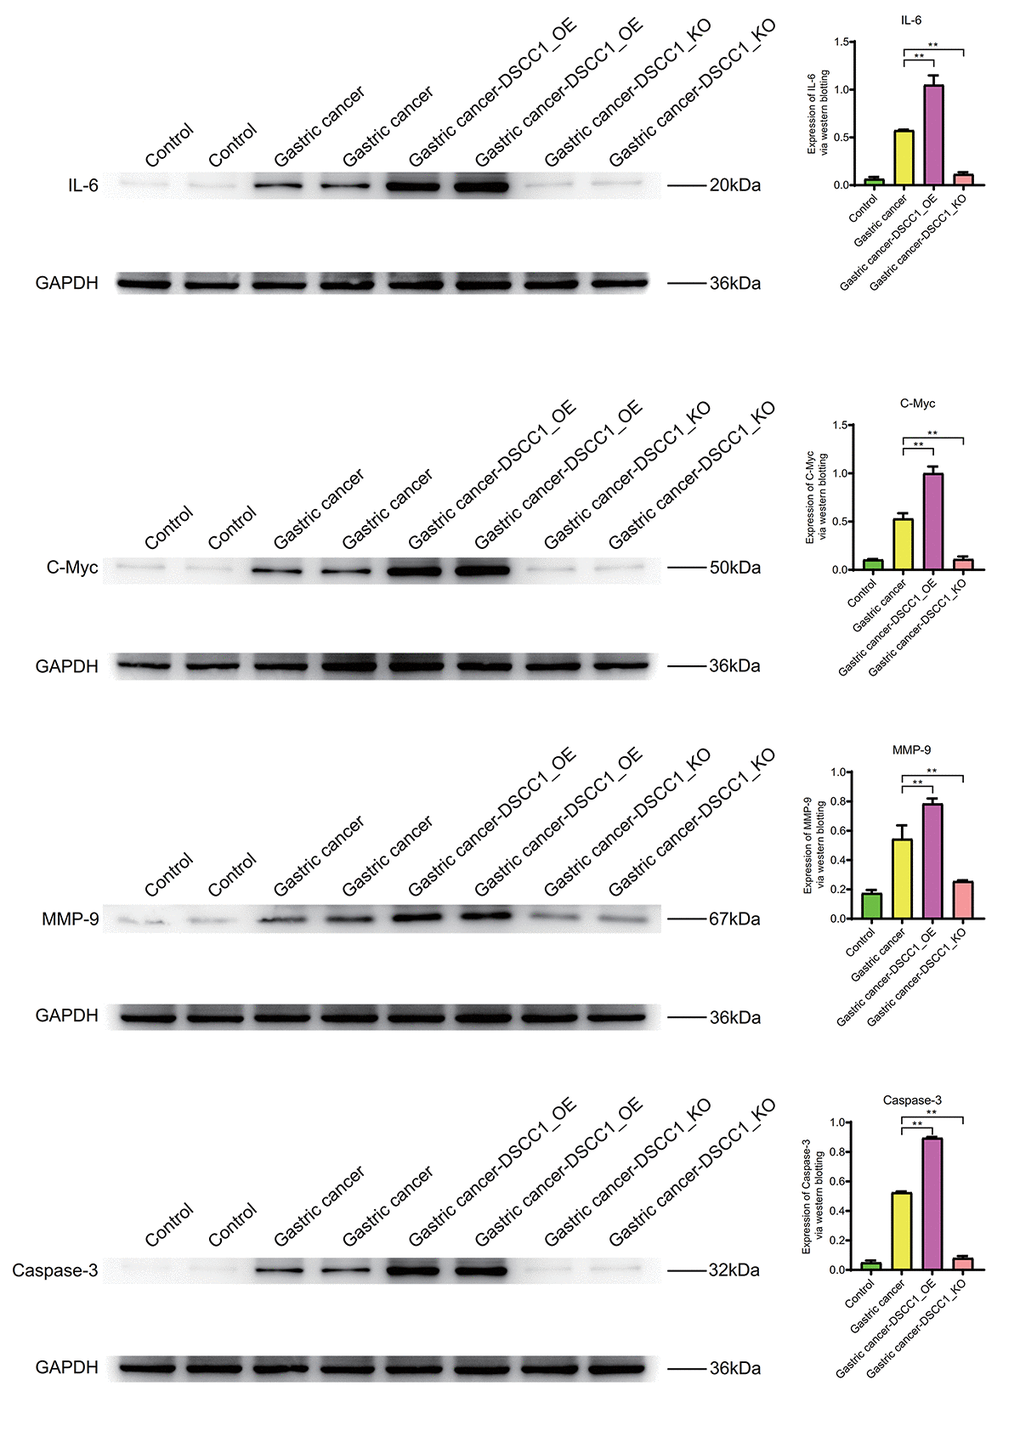 Western blotting. Protein expression levels of IL-6, C-Myc, MMP-9, Caspase-3.